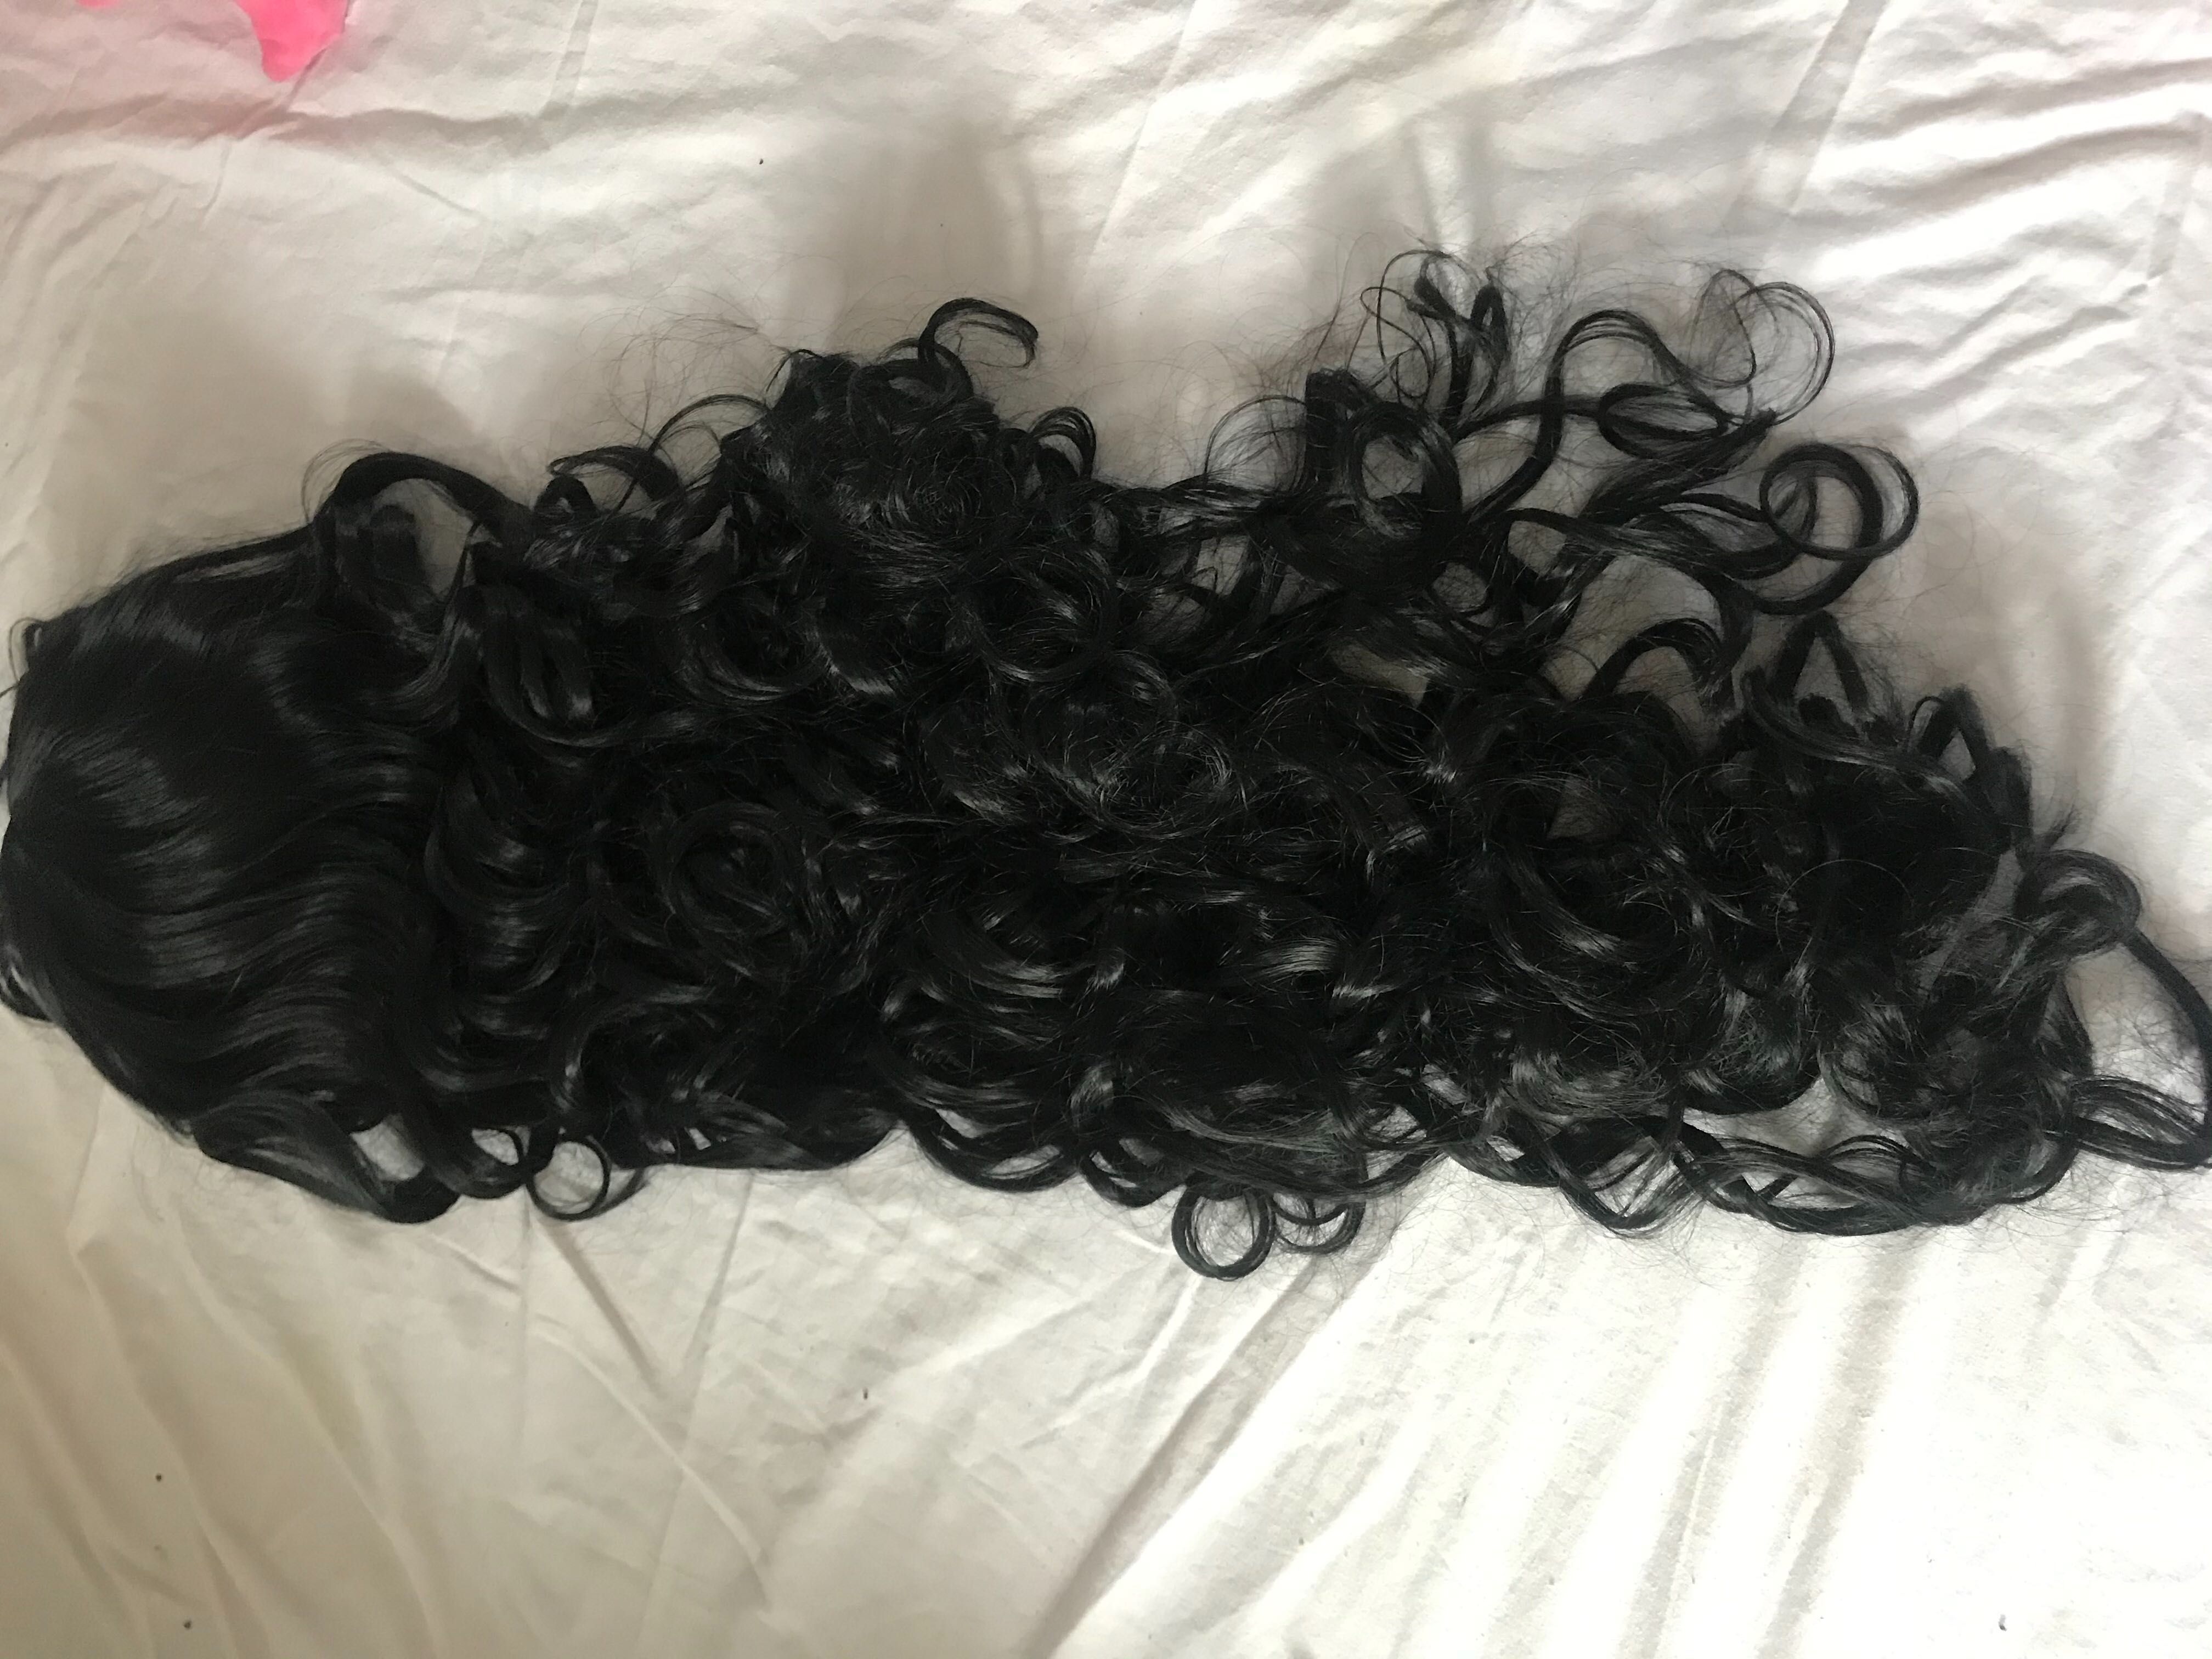 Peruka czarna loki Wig gothic lolita wigs/Rockstar wigs, Godiva black